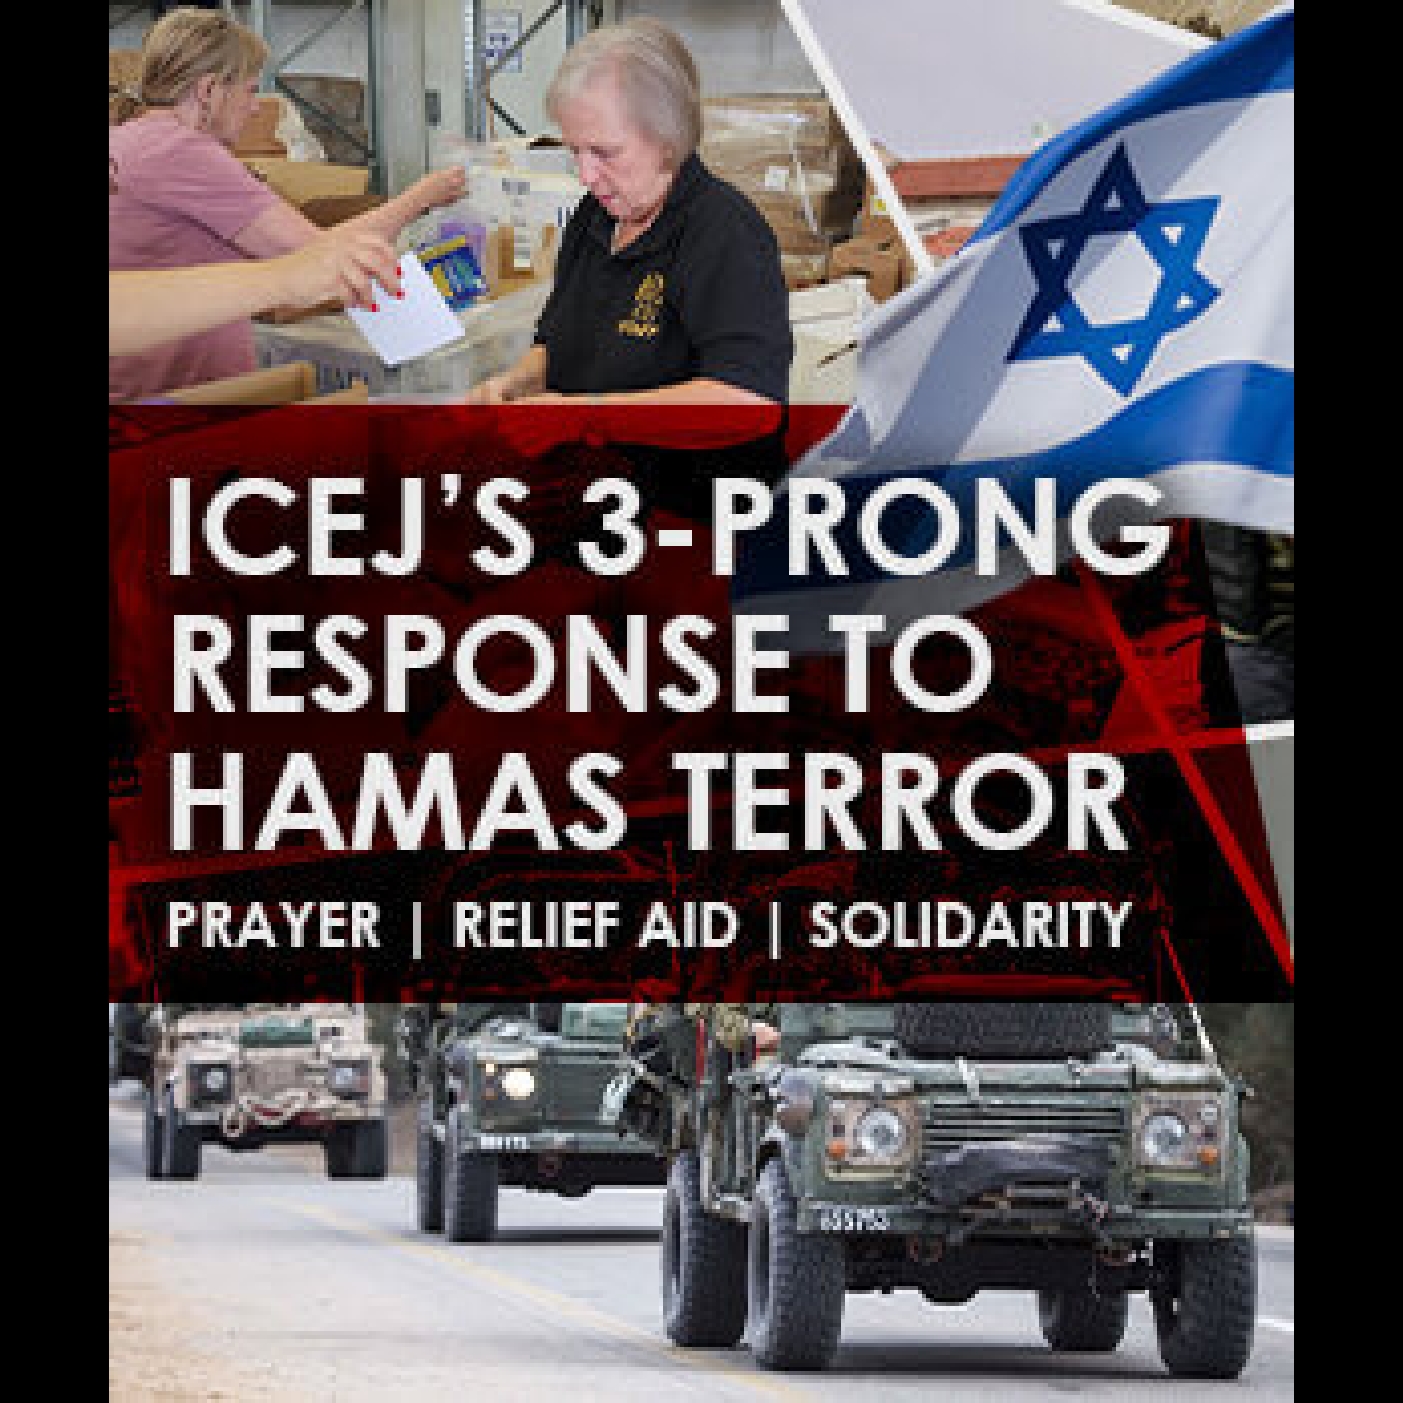 Is Christian Support for Israel Eroding? - Dr. Susan Michael - USA Director, International Christian Embassy Jerusalem